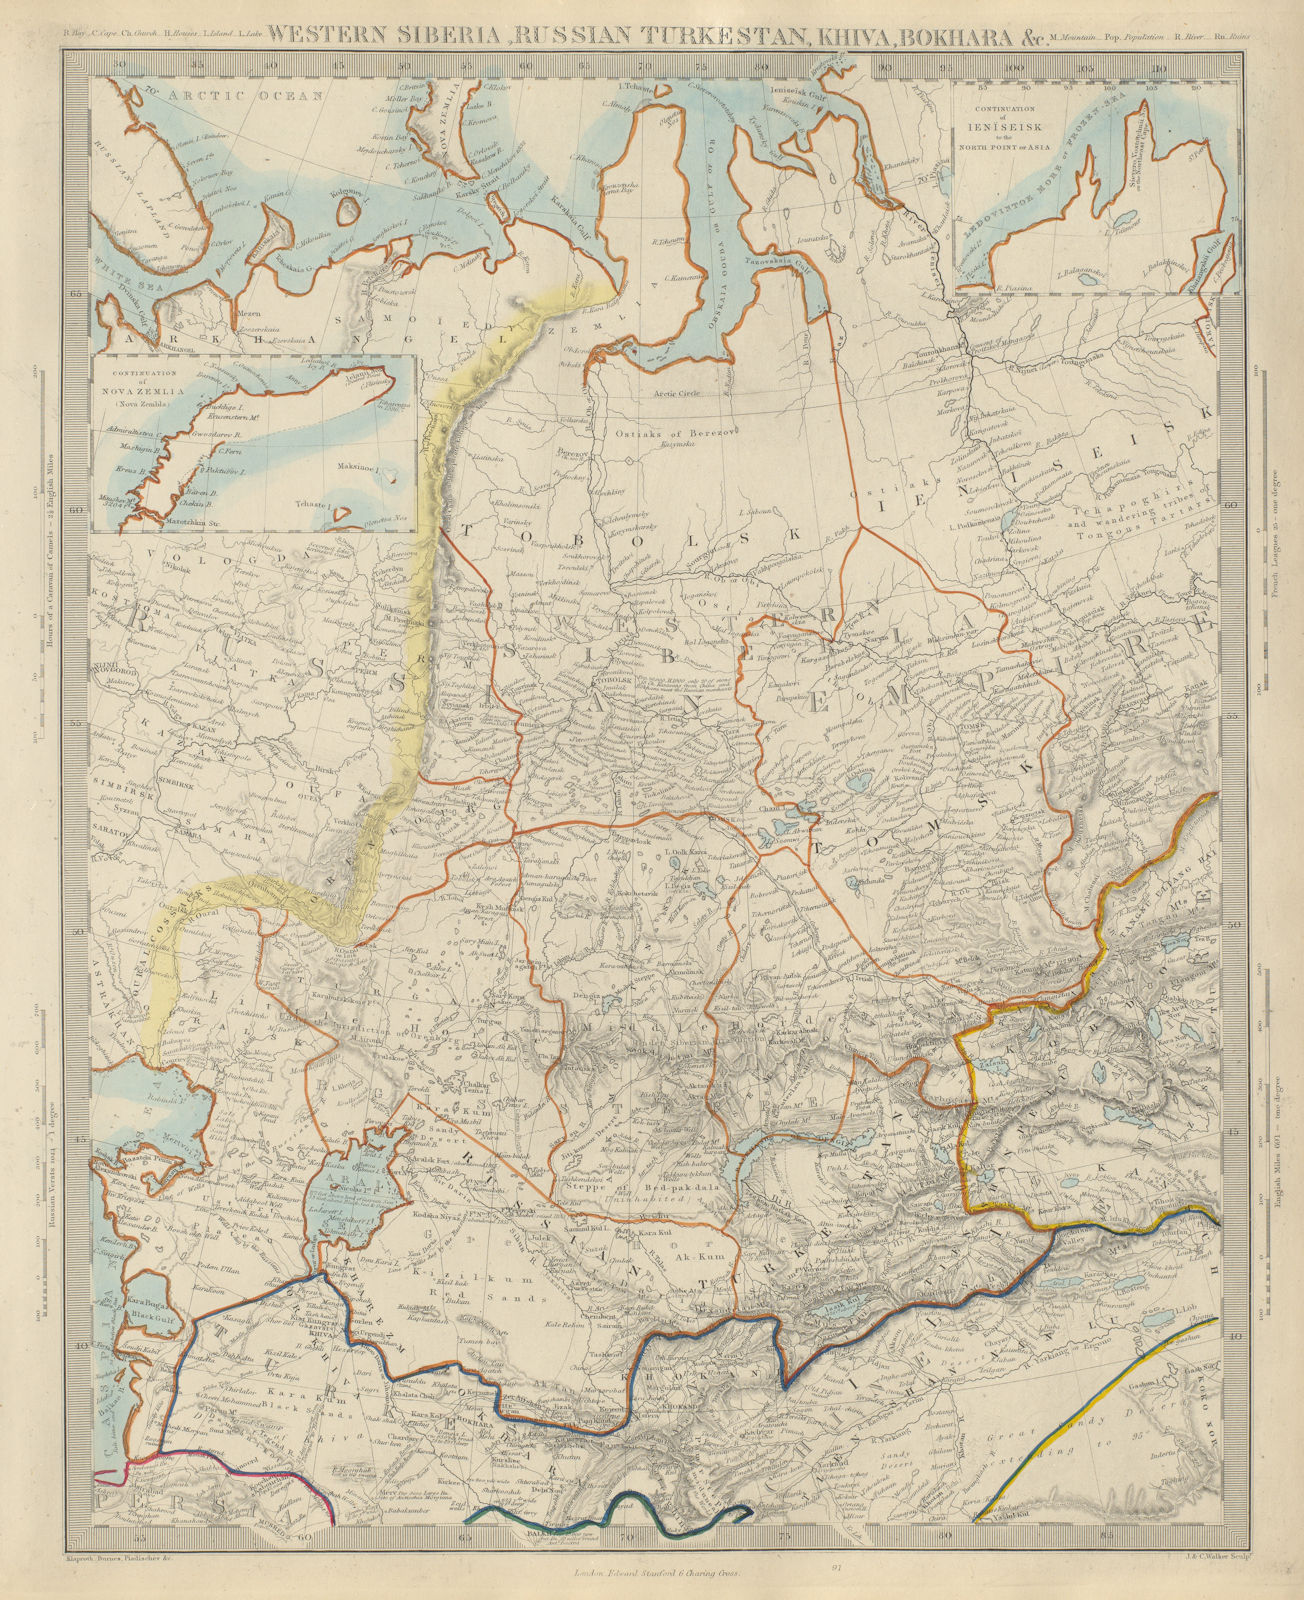 CENTRAL ASIA. Western Siberia Russian Turkestan Khiva Bukhara. SDUK 1874 map